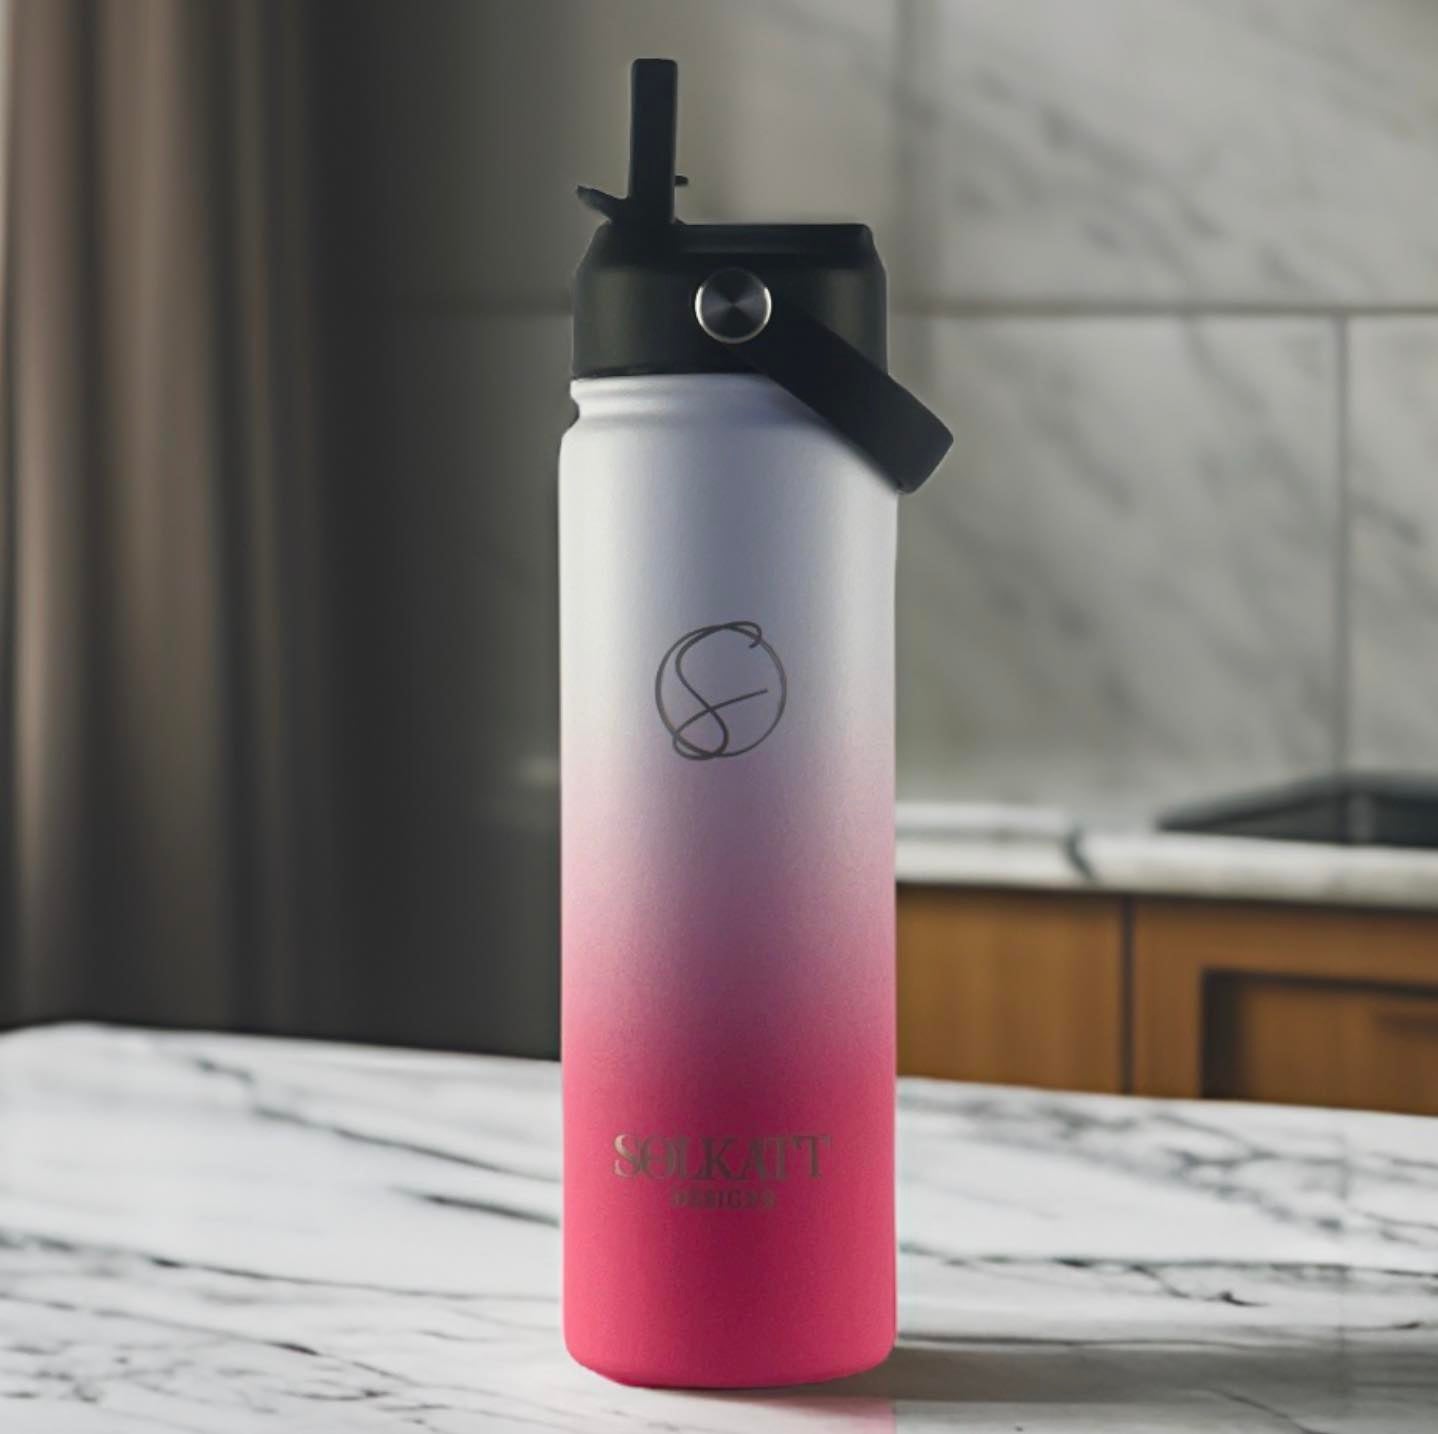 Hot Pink 650ml / 22oz Stainless Steel Insulated Drink Bottle - Solkatt Designs 